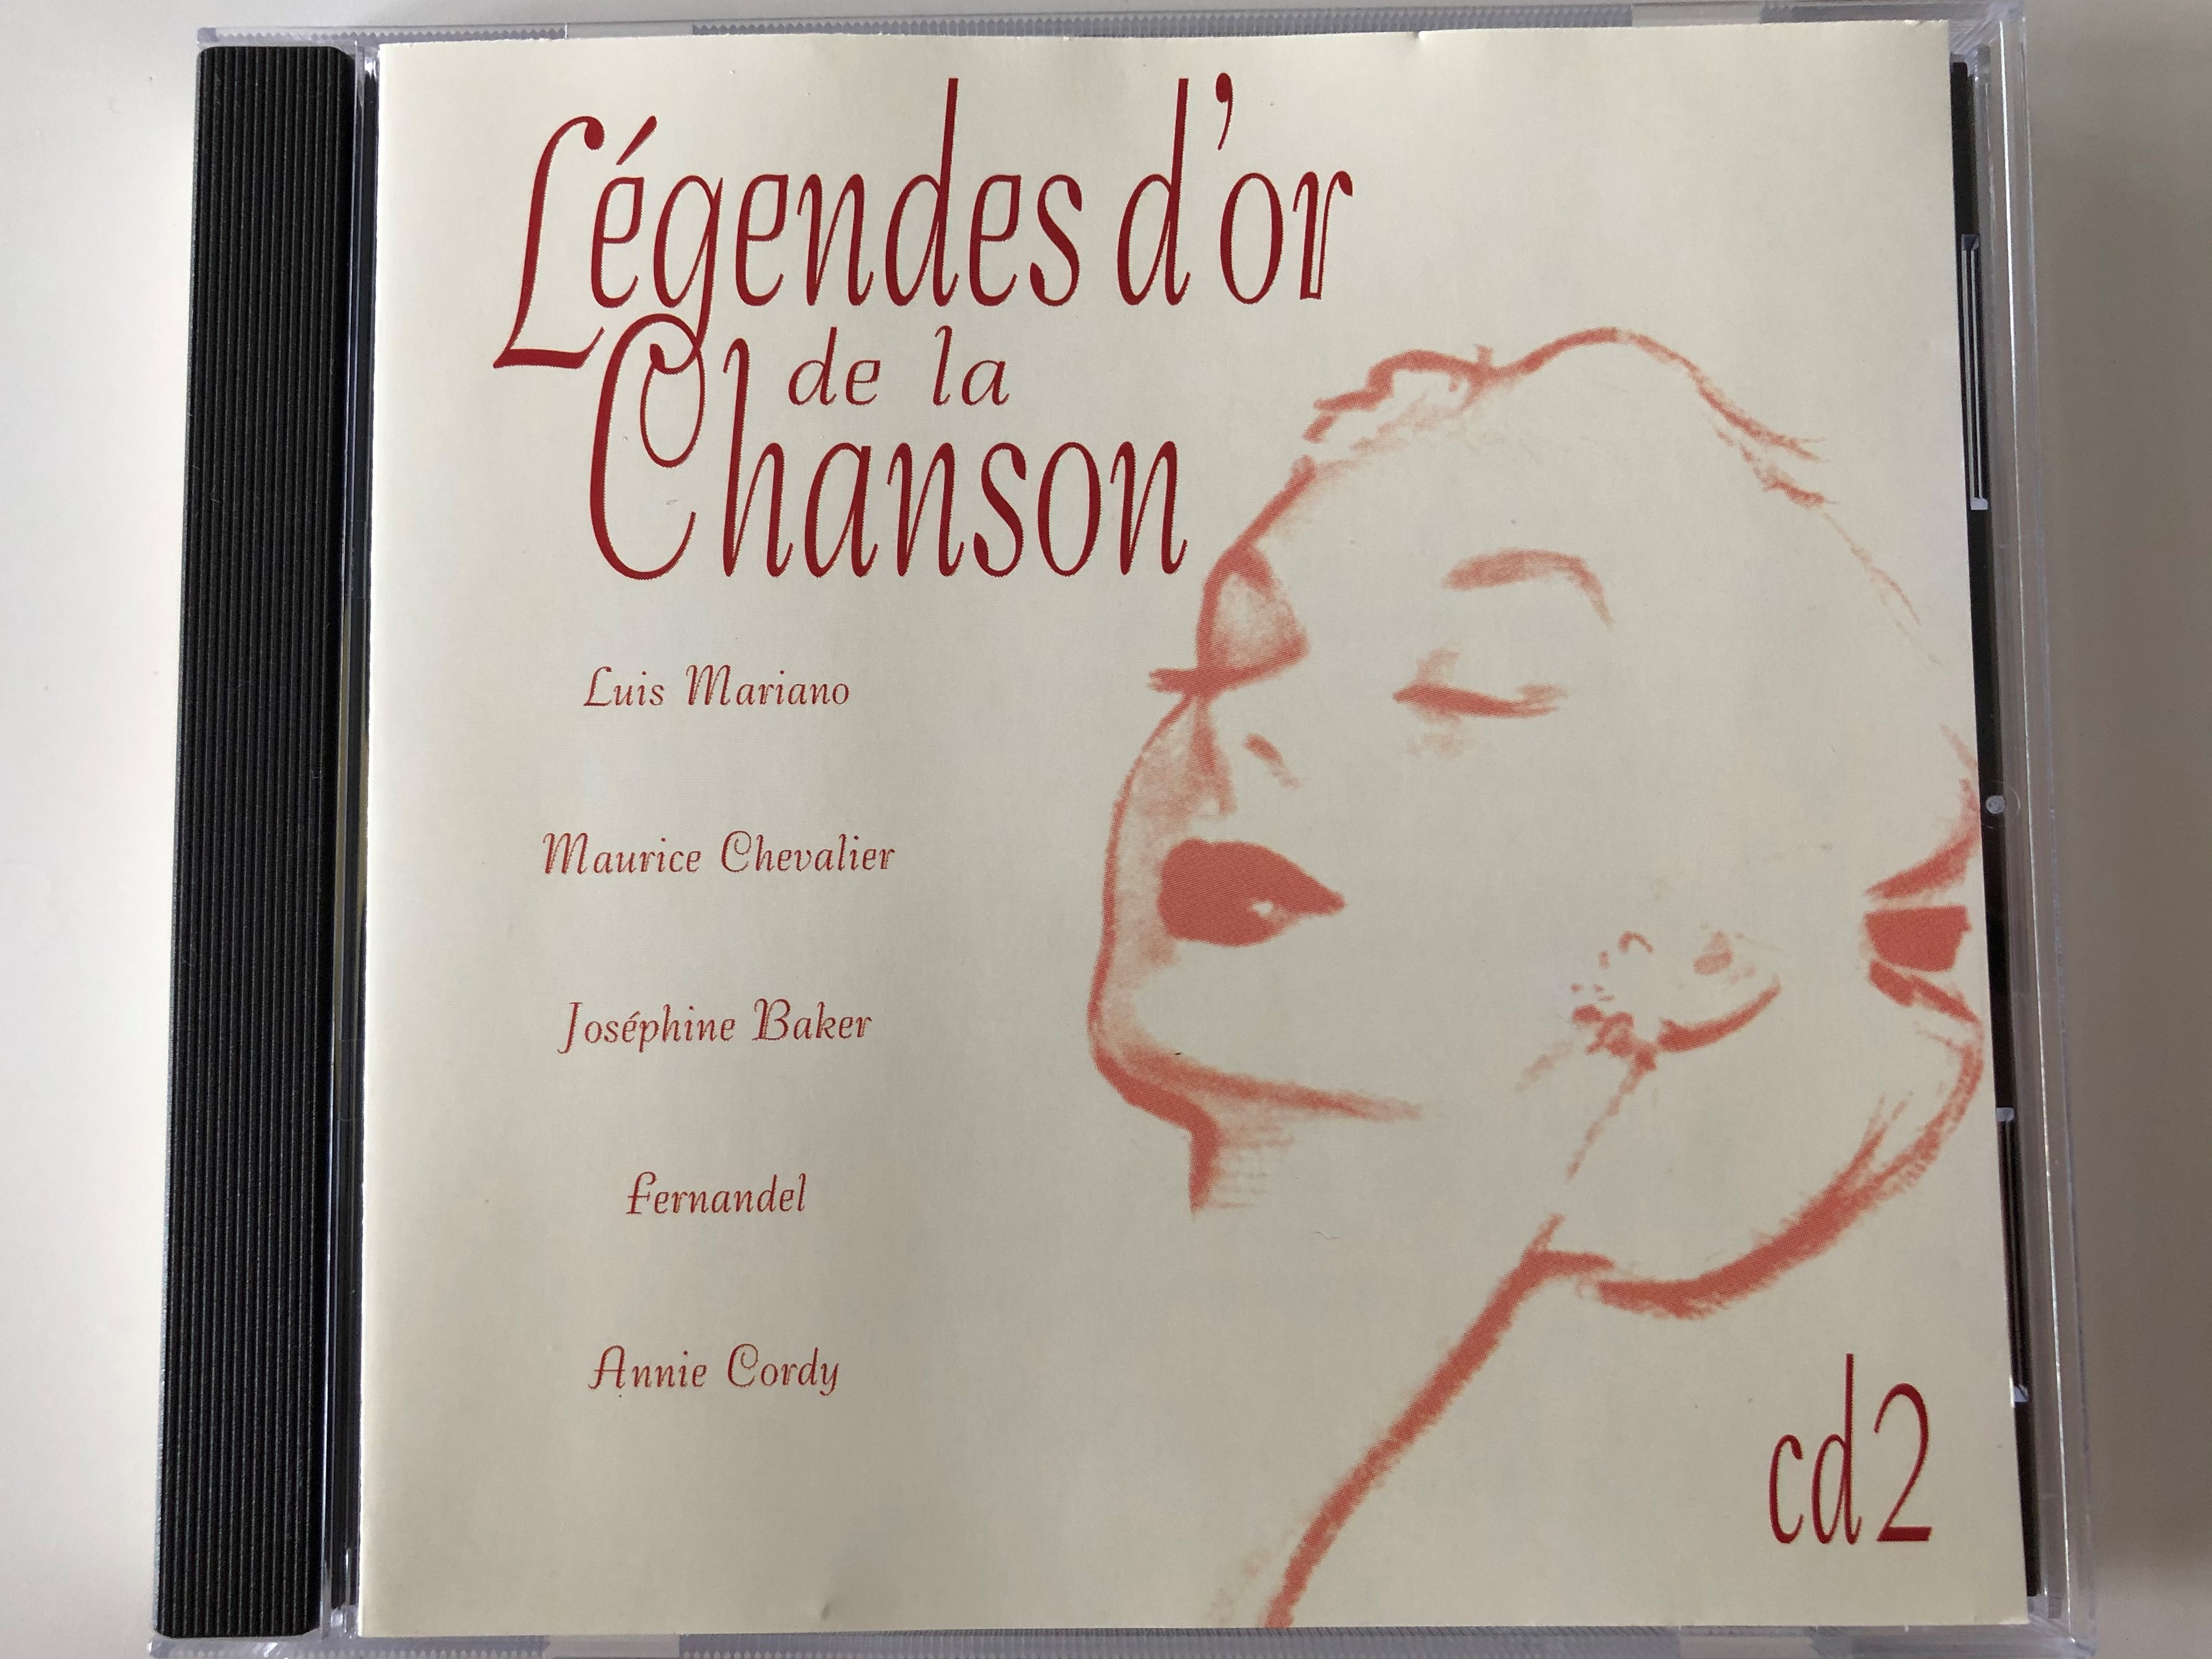 l-gendes-d-or-de-la-chanson-luis-mariano-maurice-chevalier-josephine-baker-fernandel-annie-cordy-cd-2-disky-audio-cd-1998-bx-888122-1-.jpg